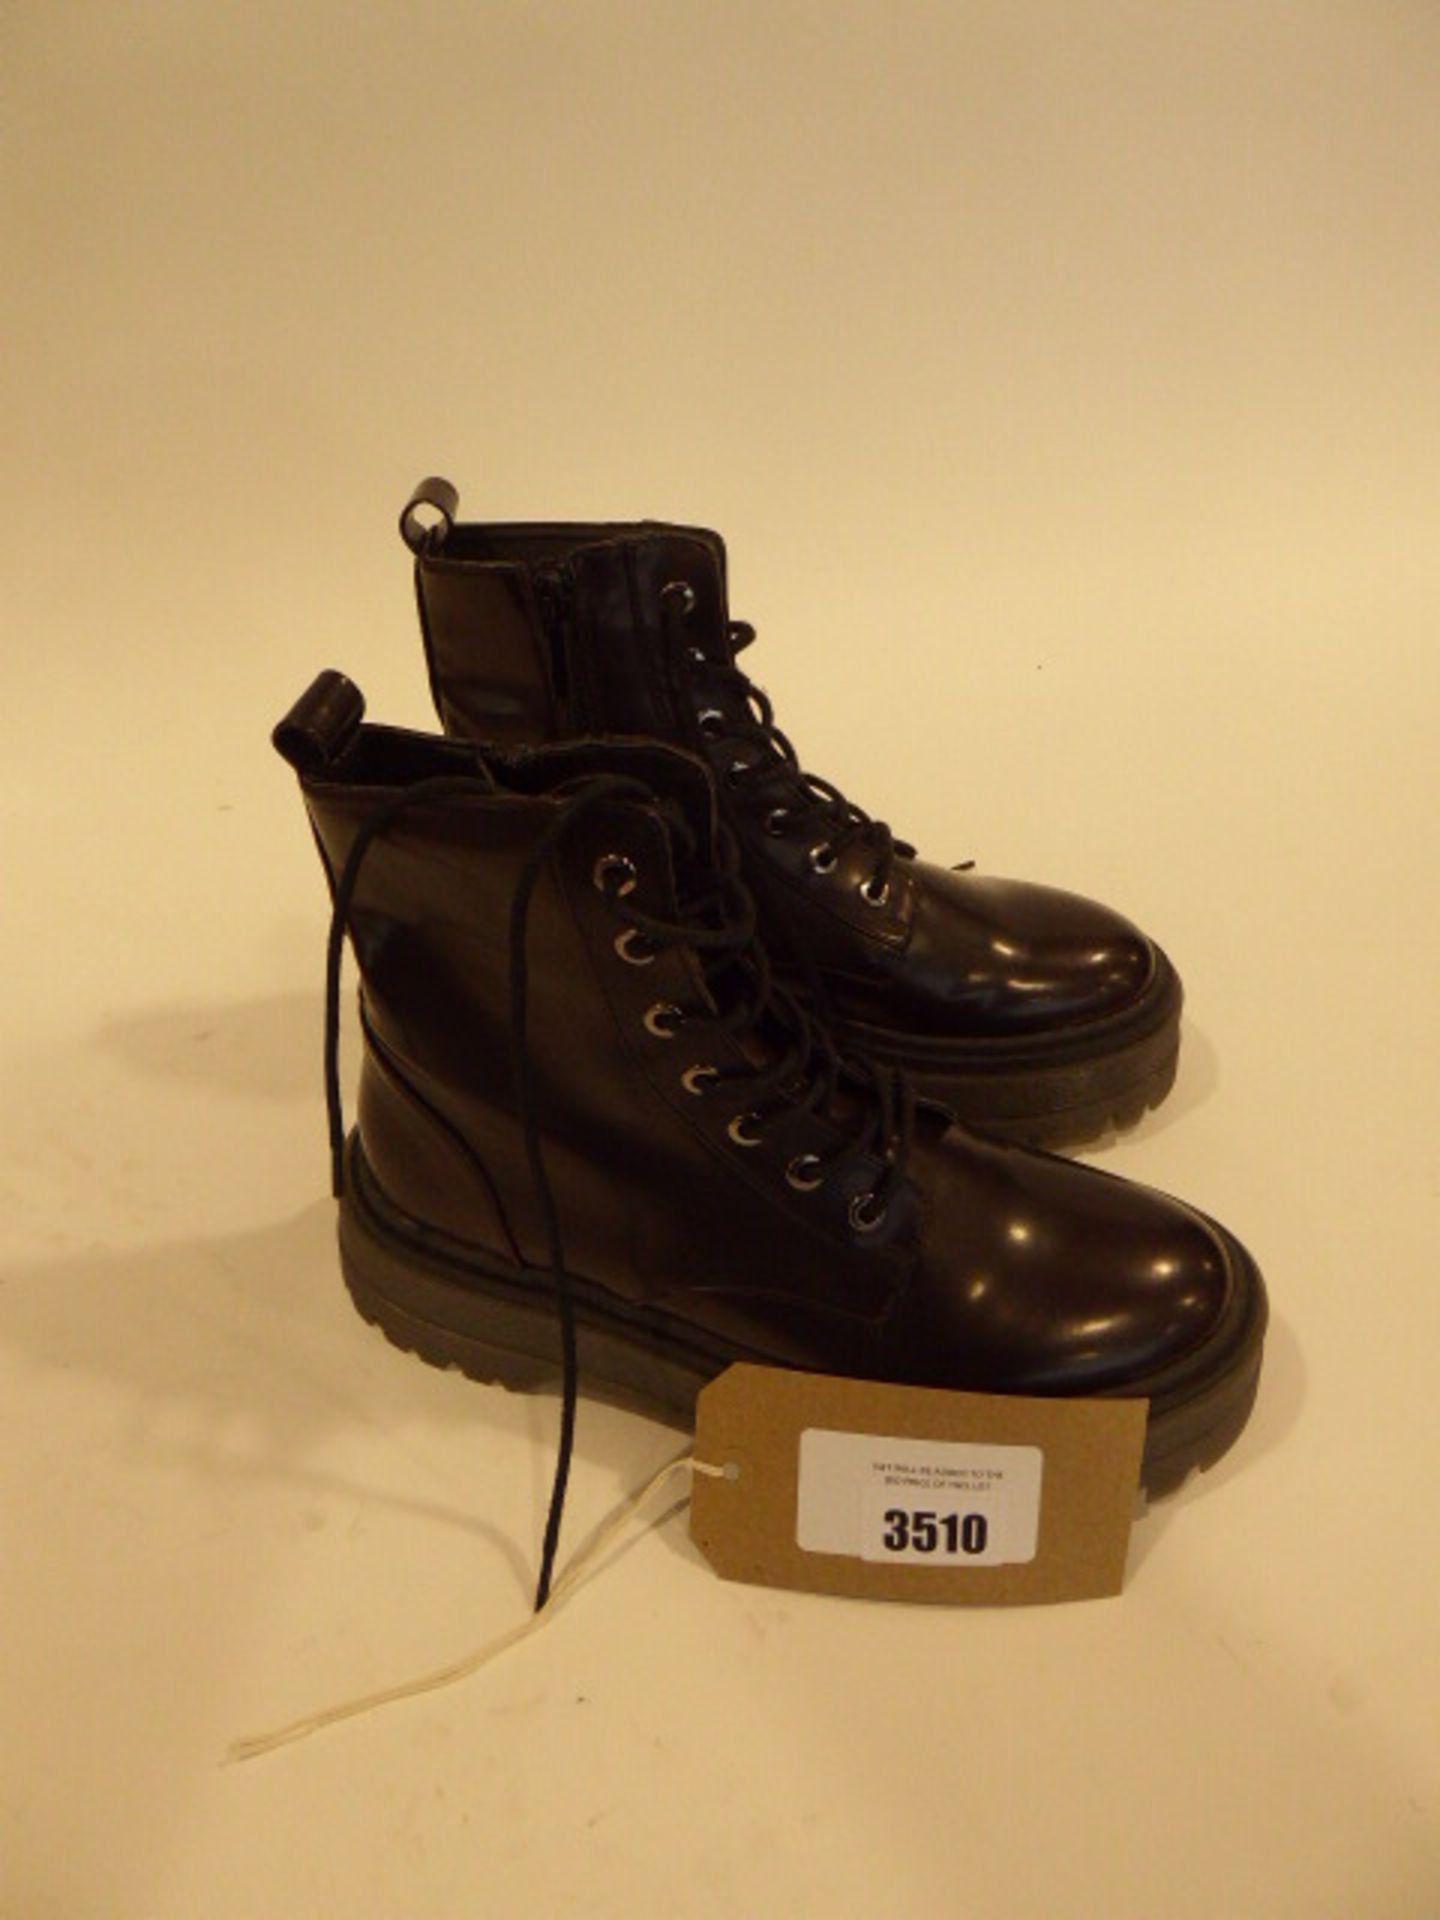 3510 - Bershka ankle boots size EU 37 - Image 2 of 3